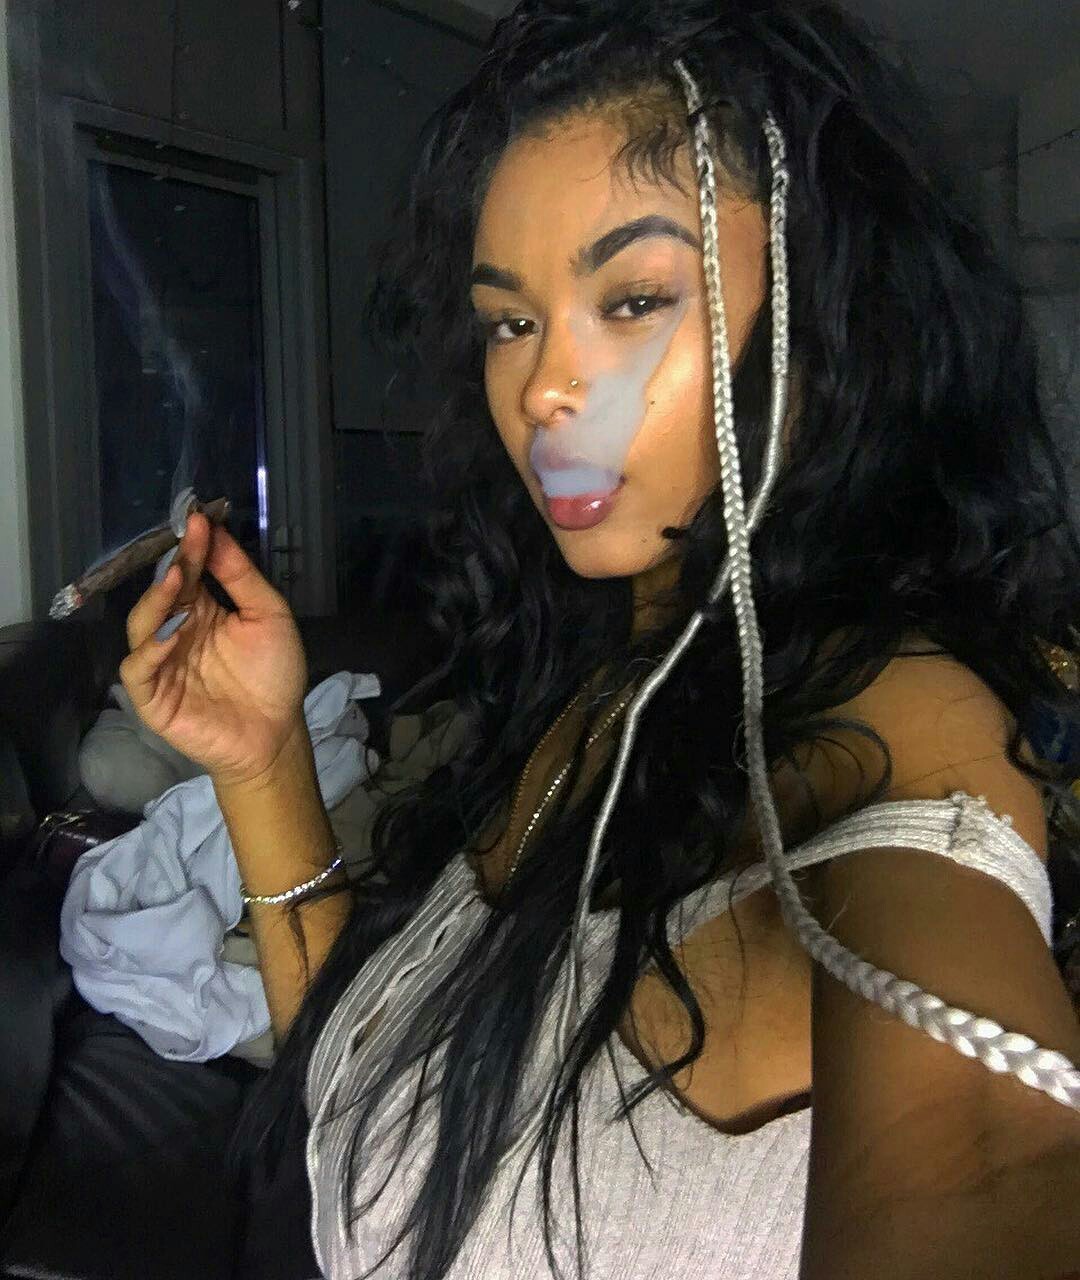 Smoking weed girls pretty girly bongs